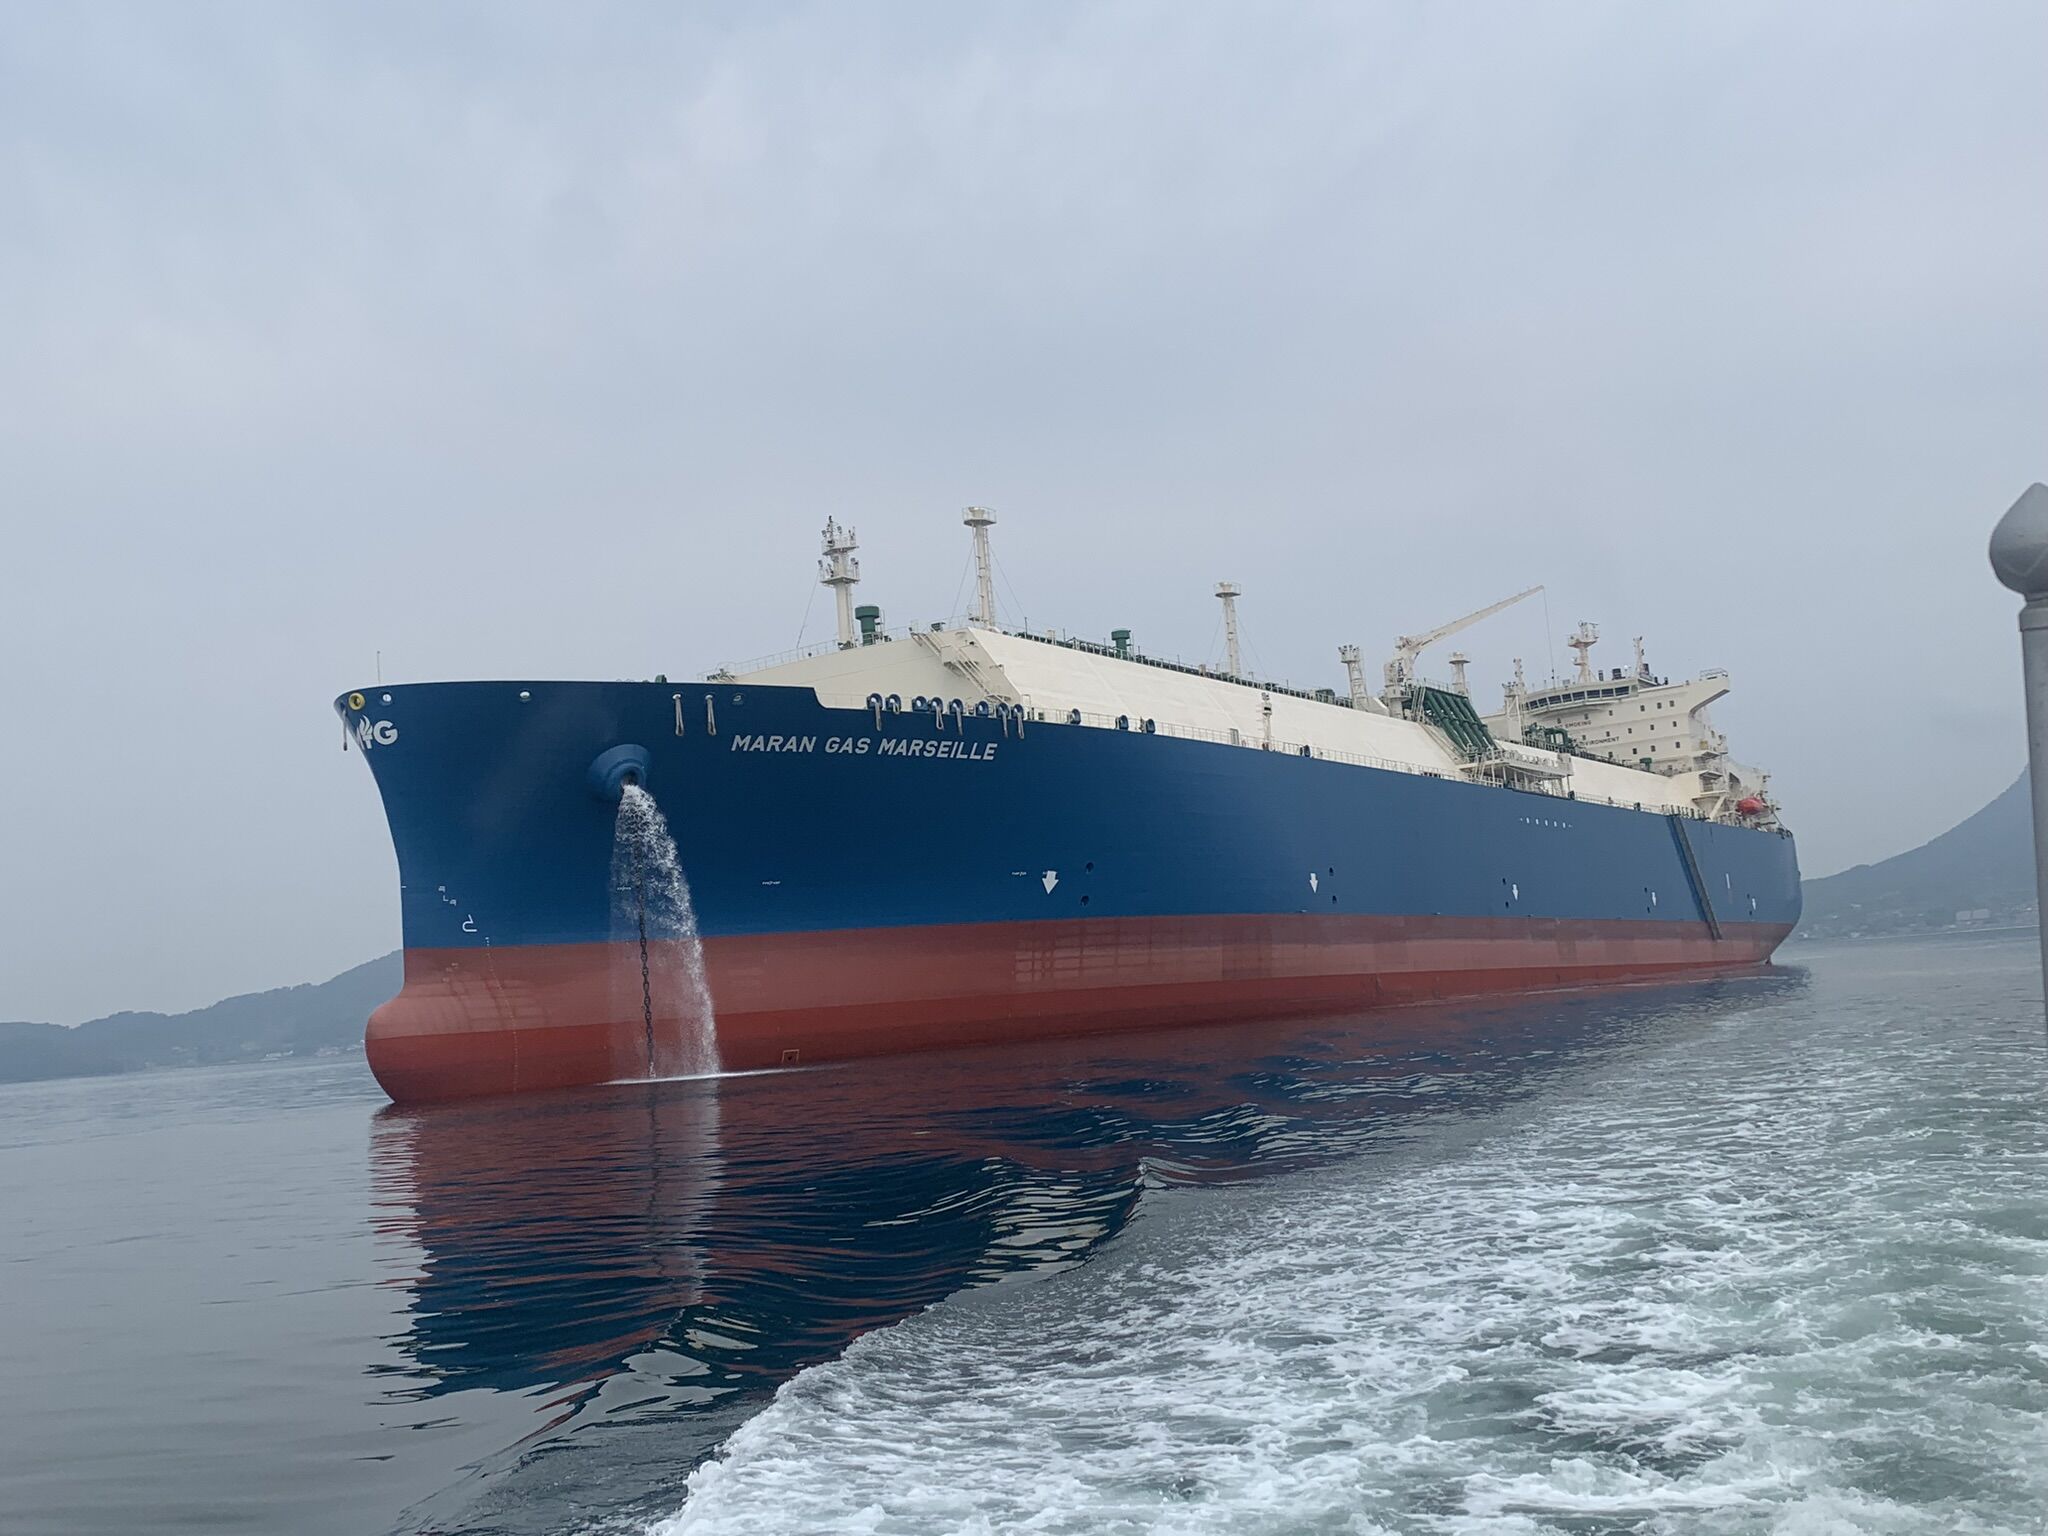 Greece's Maran Gas welcomes new LNG carrier in its fleet